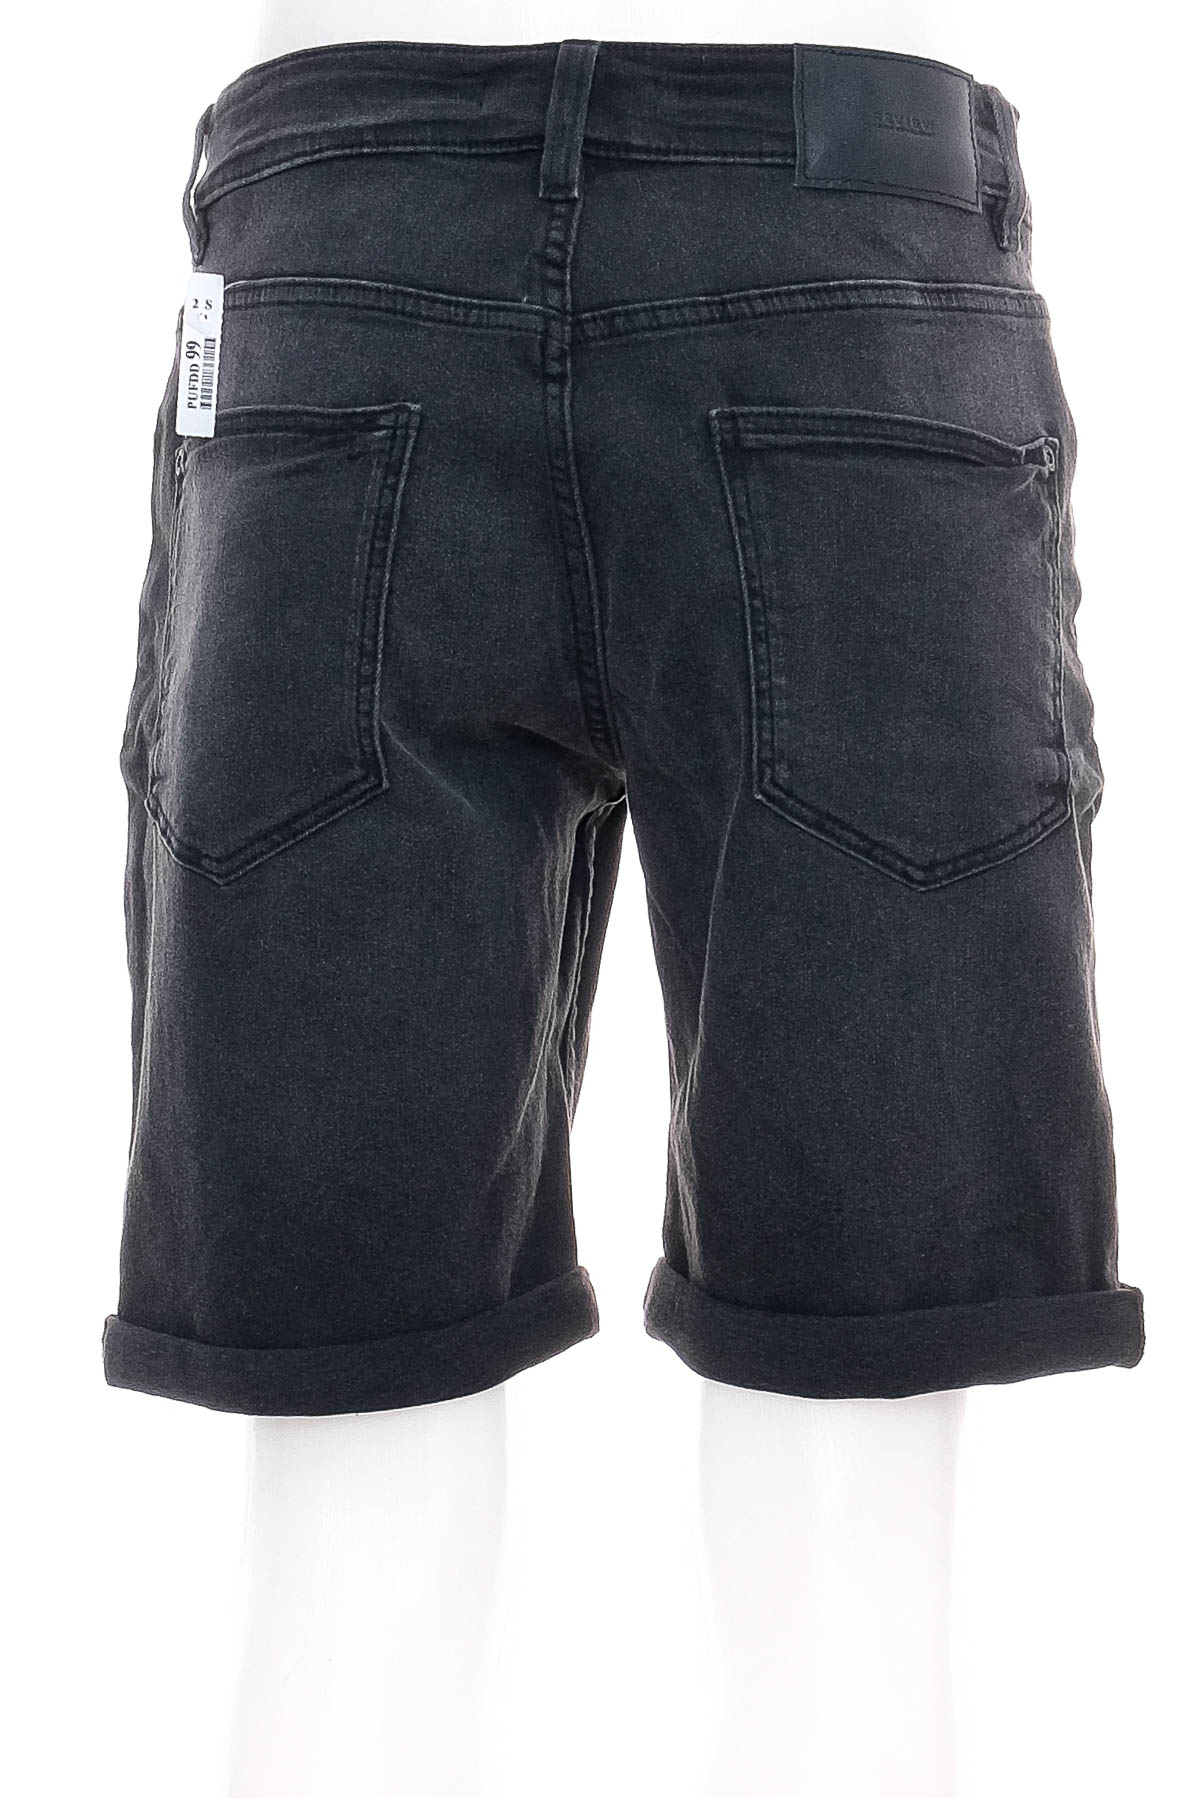 Pantaloni scurți bărbați - REVIEW - 1